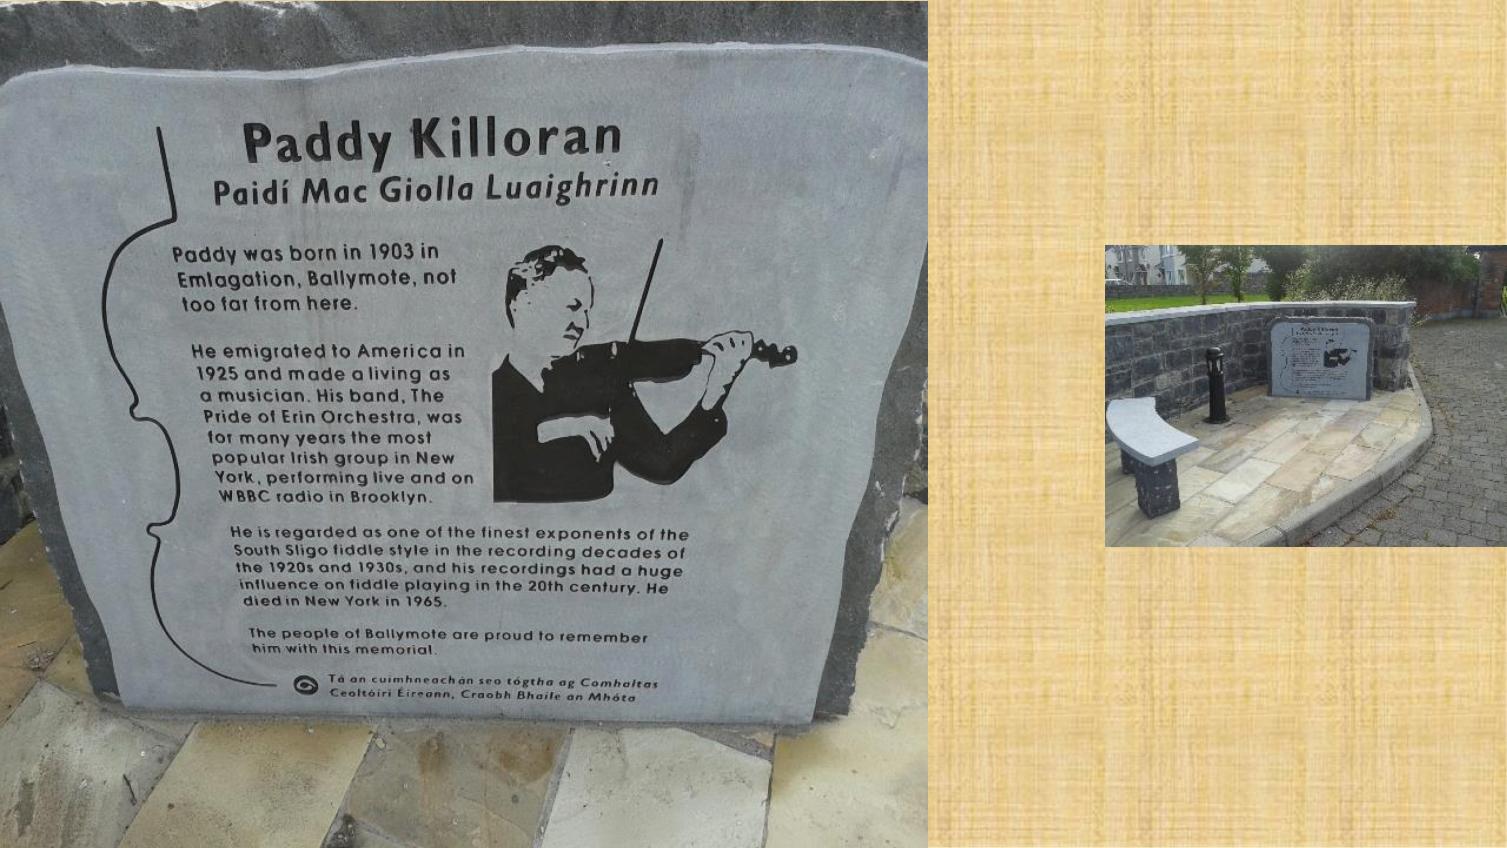 Exploring the Musical Traditions of Mayo, Sligo and Roscommon